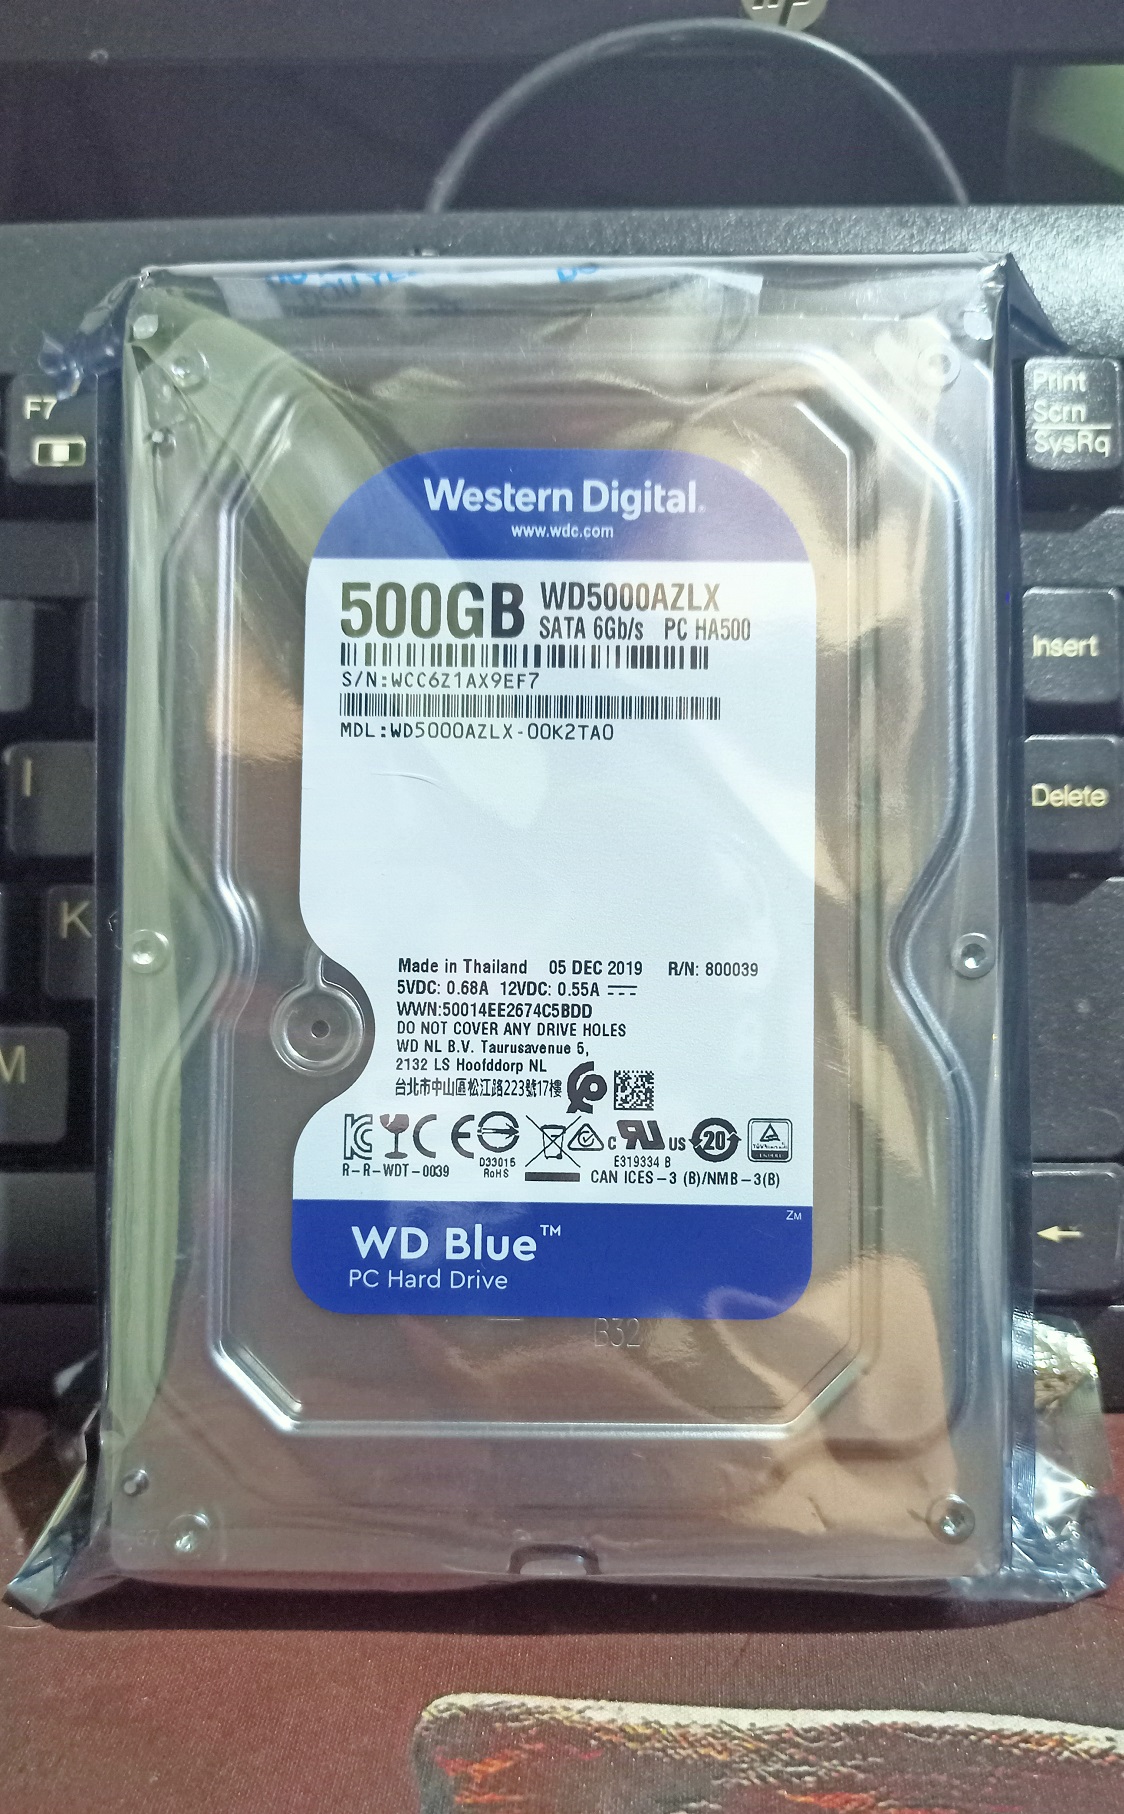 wd blue 500gb desktop hard disk drive